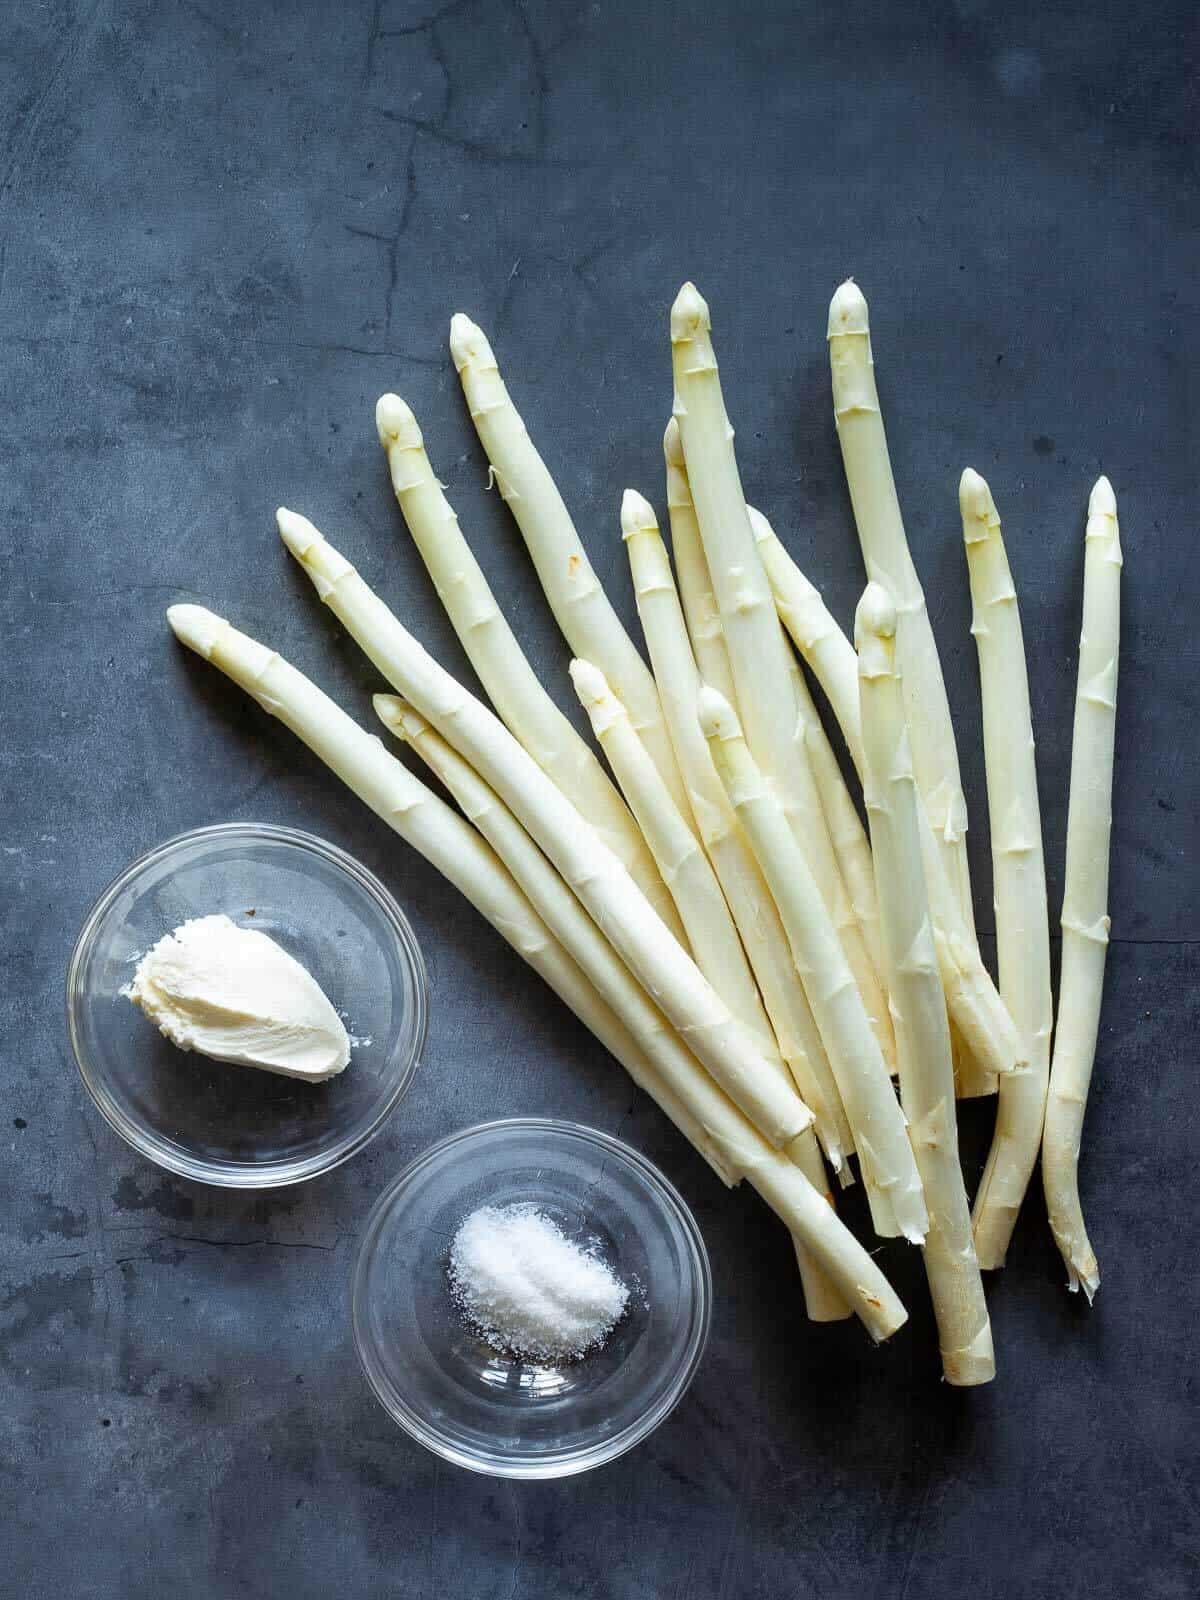 white asparagus recipe ingredients.